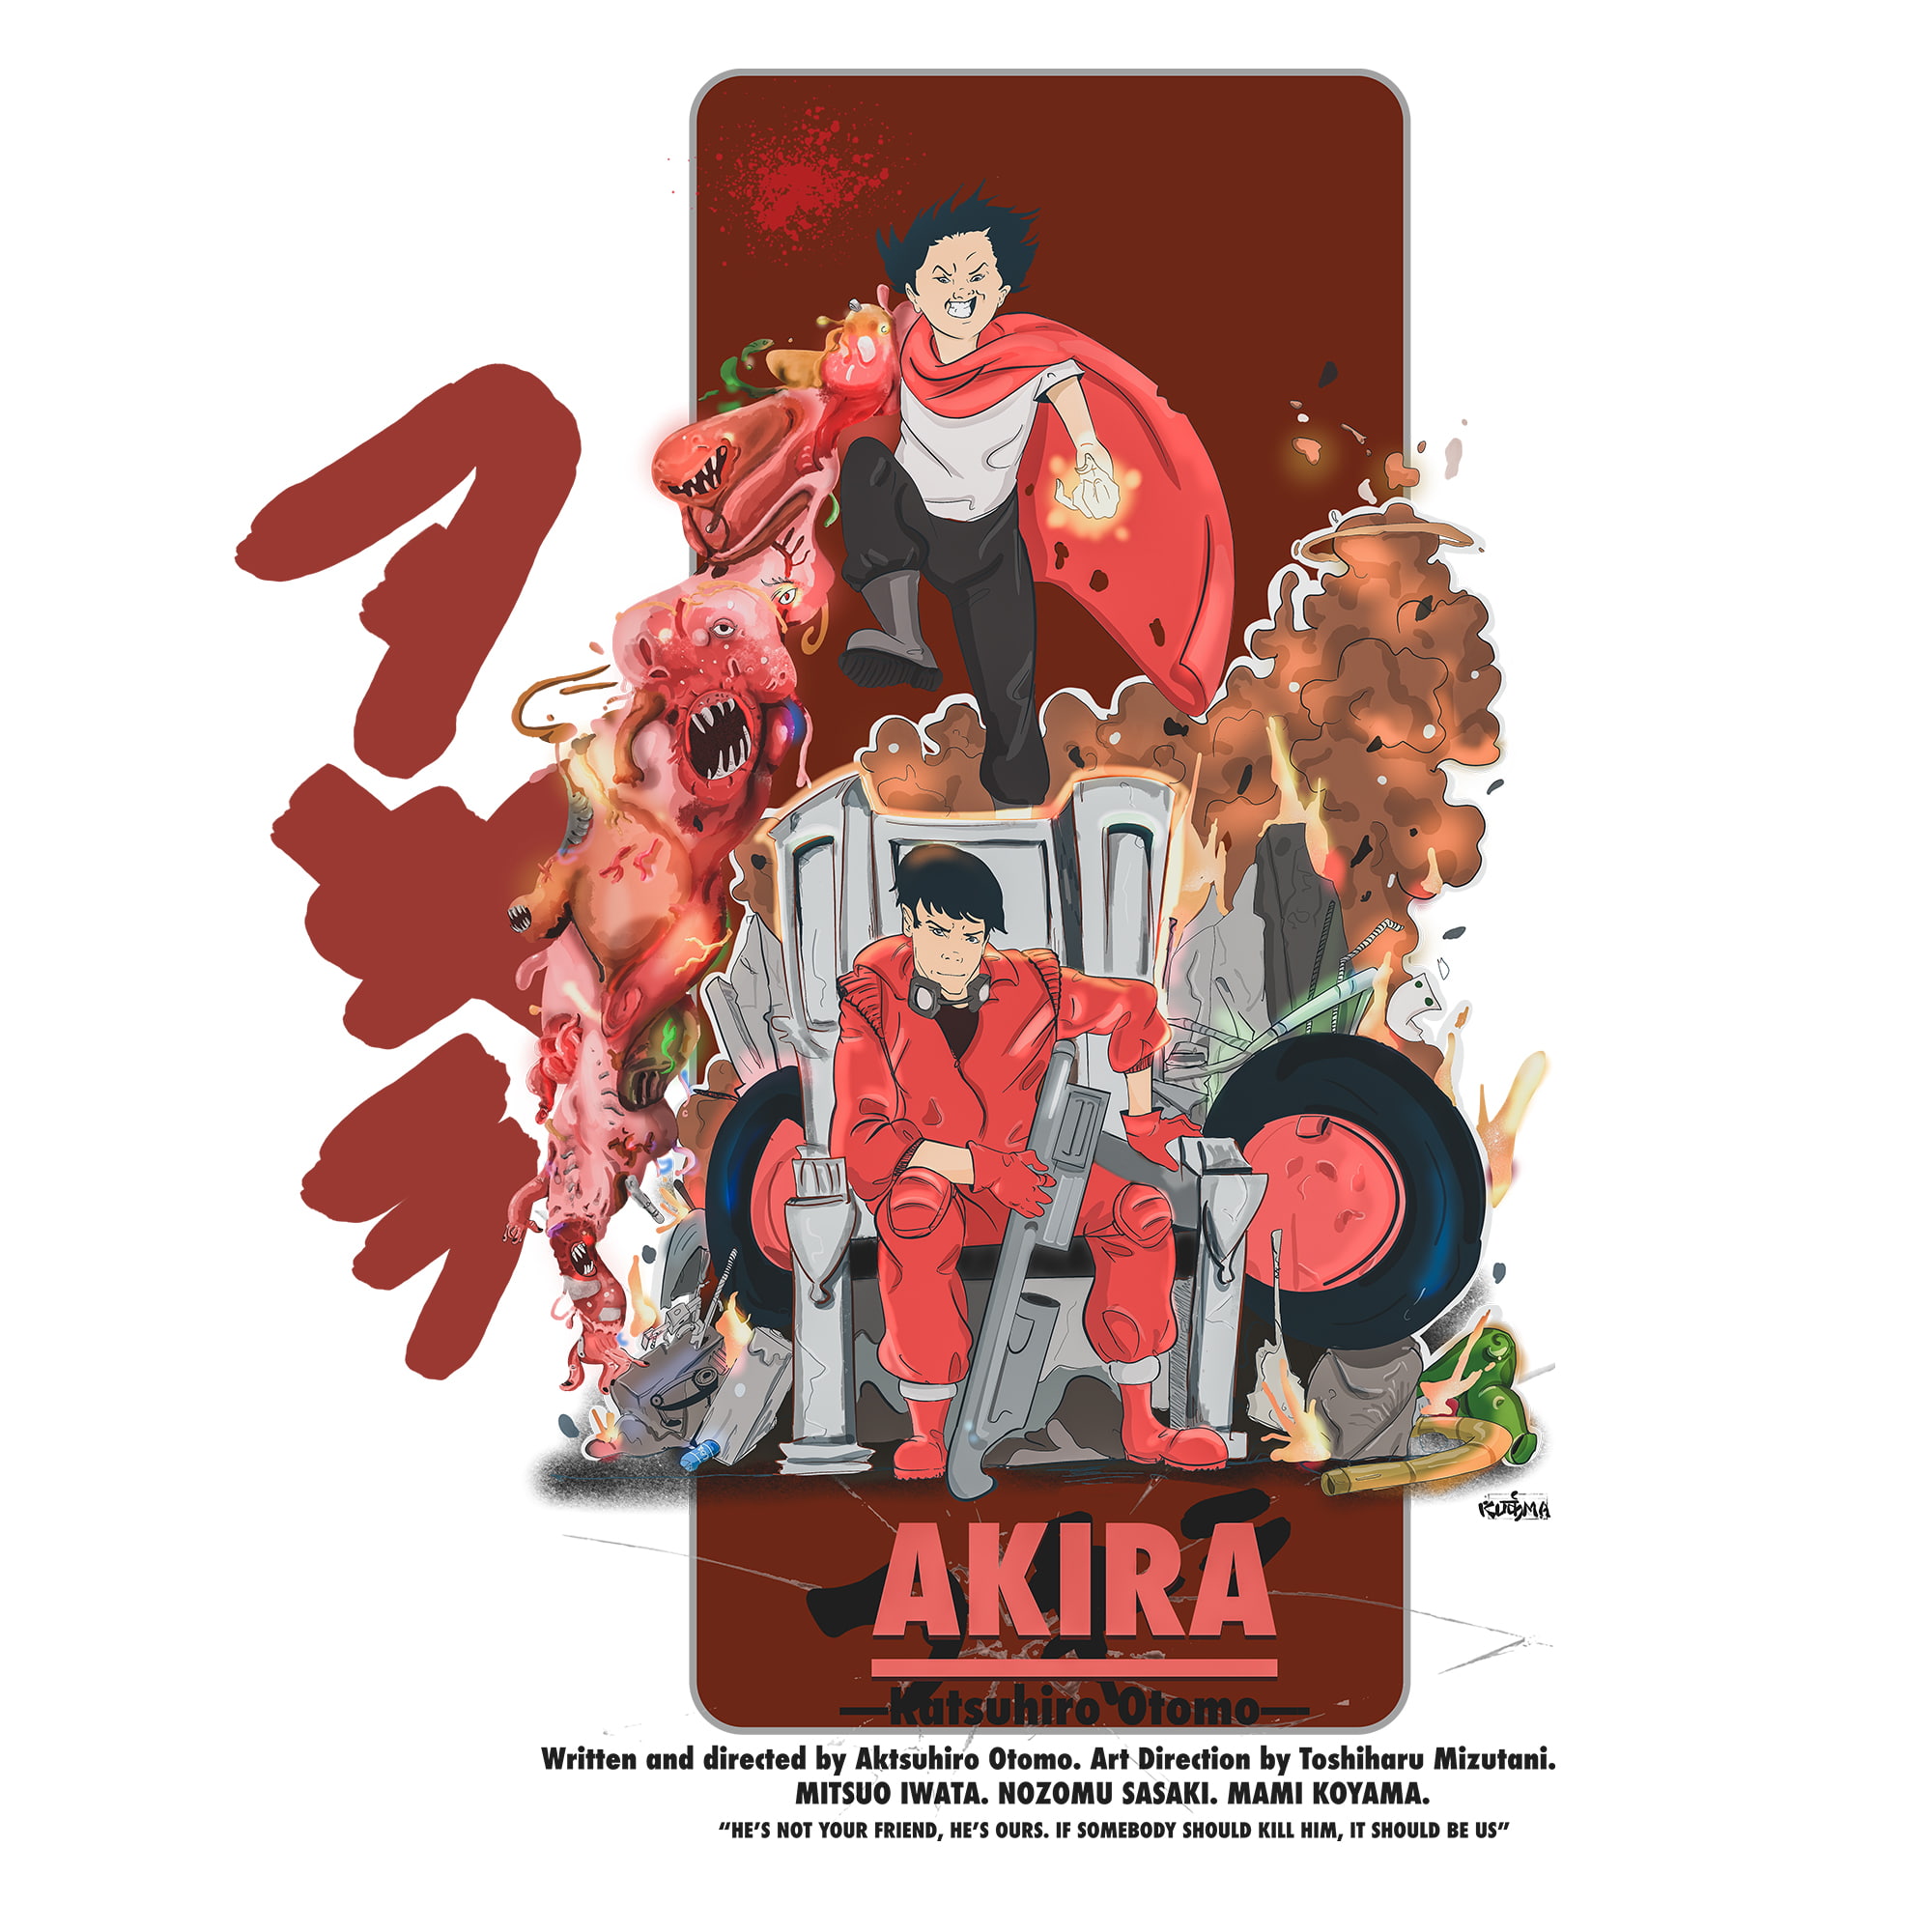 Akira Shirts products for sale  eBay